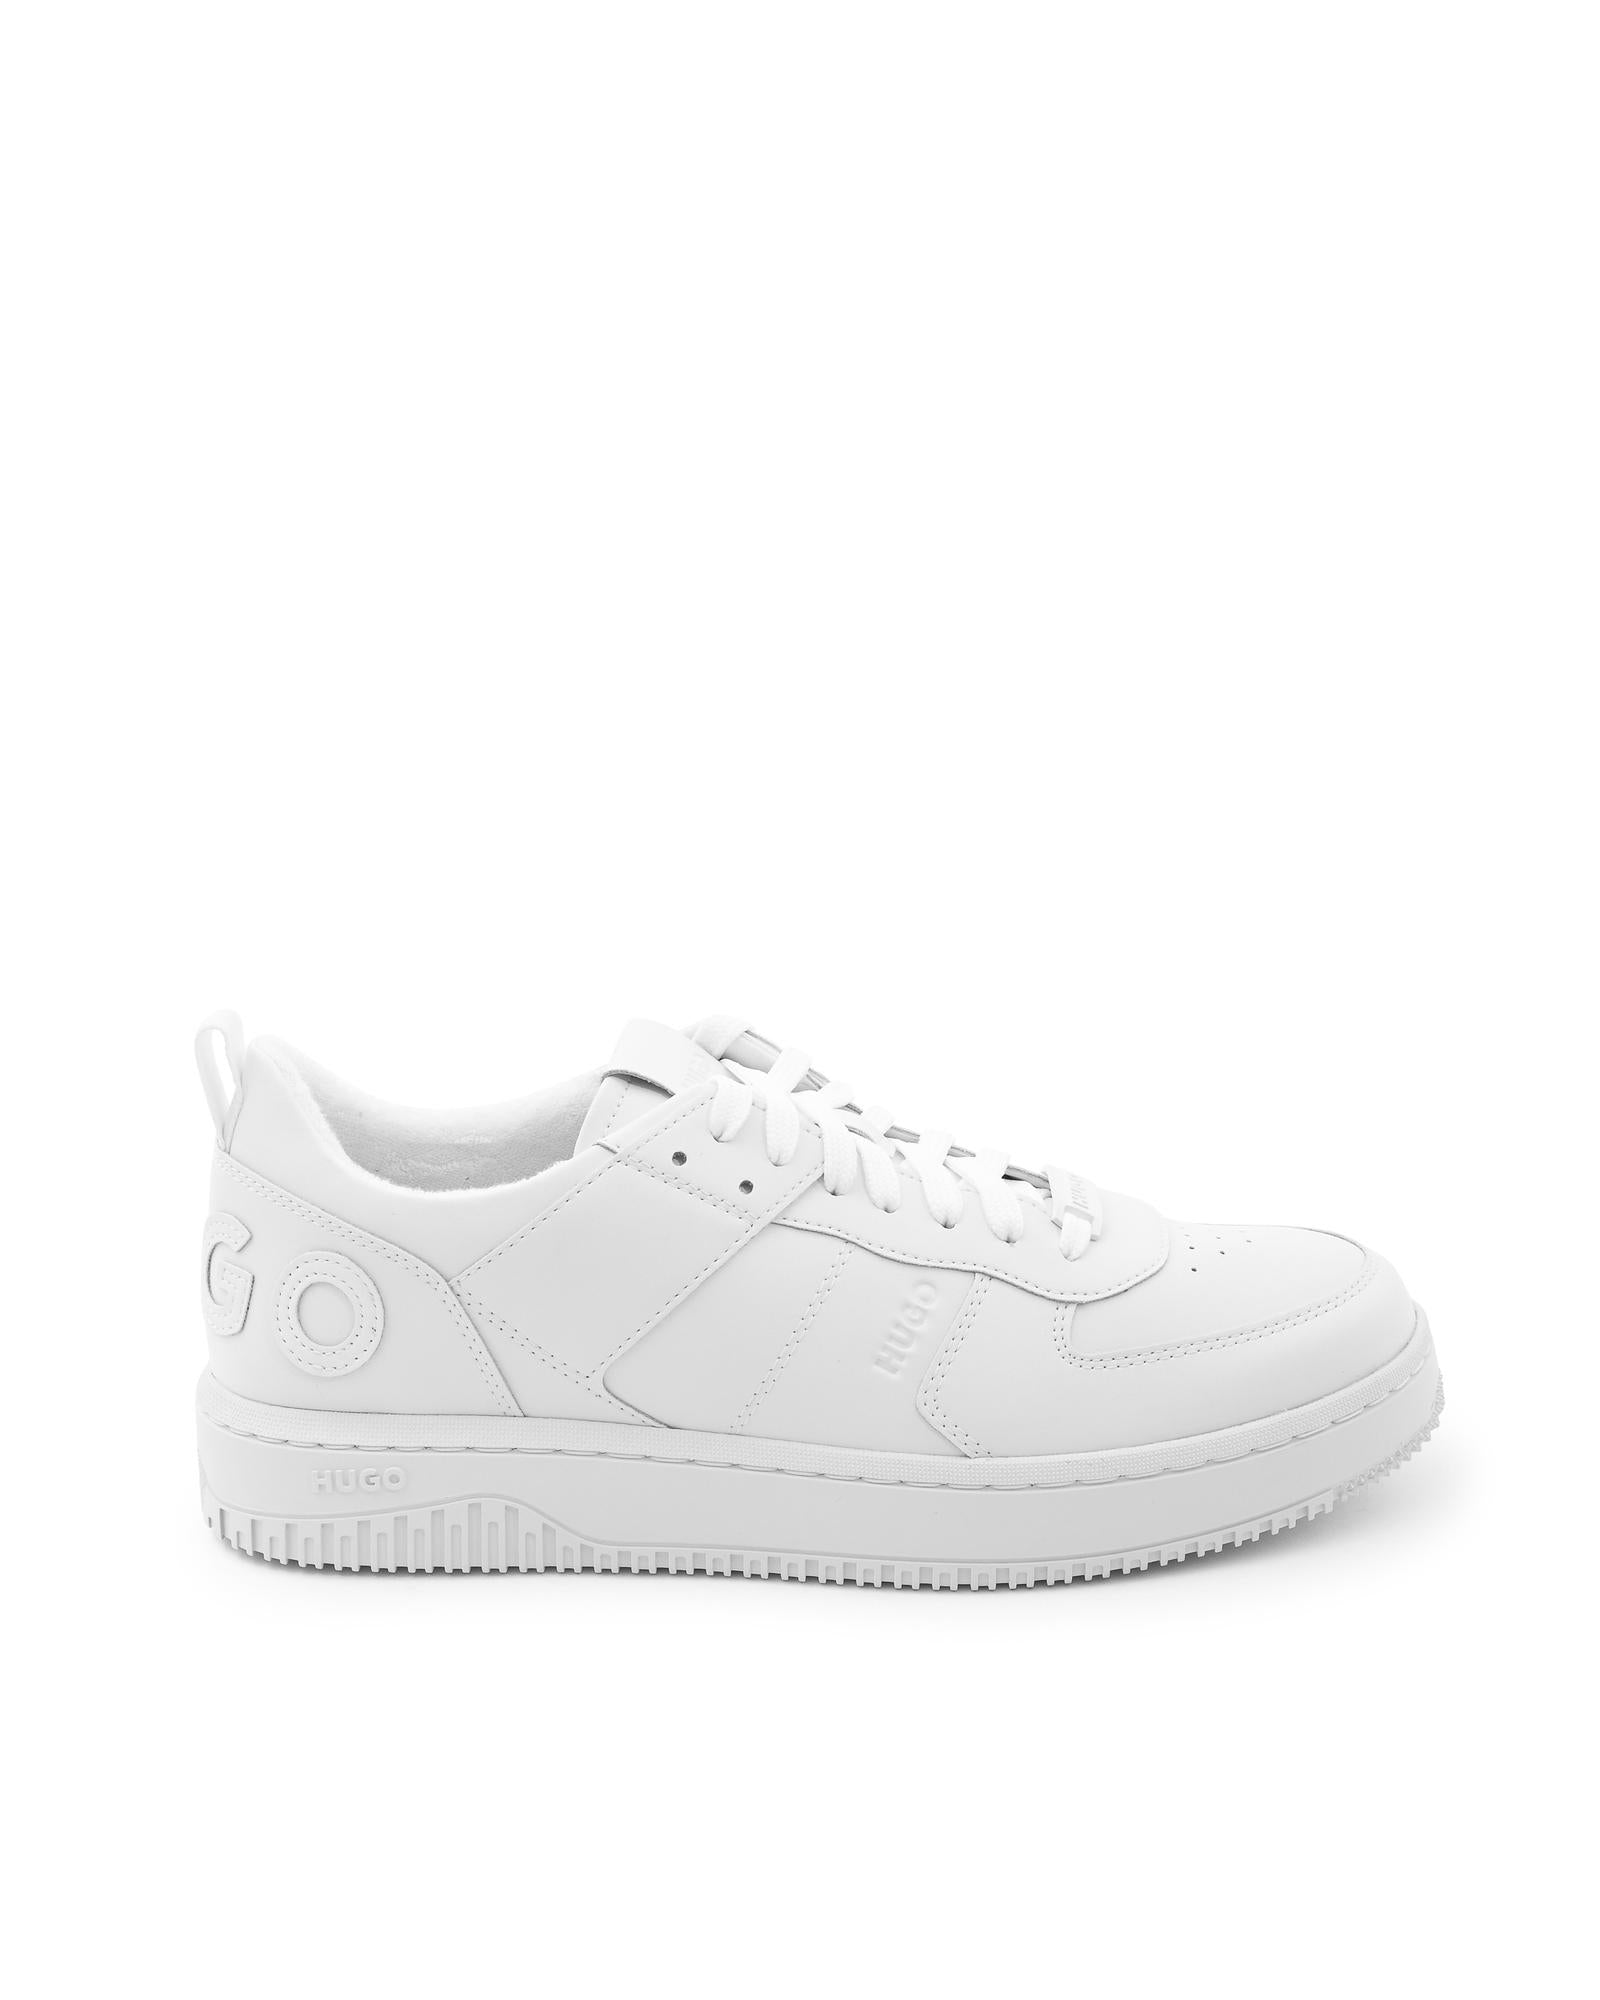 Men's Calfskin Rubber Sole Sneakers in White - 41 EU